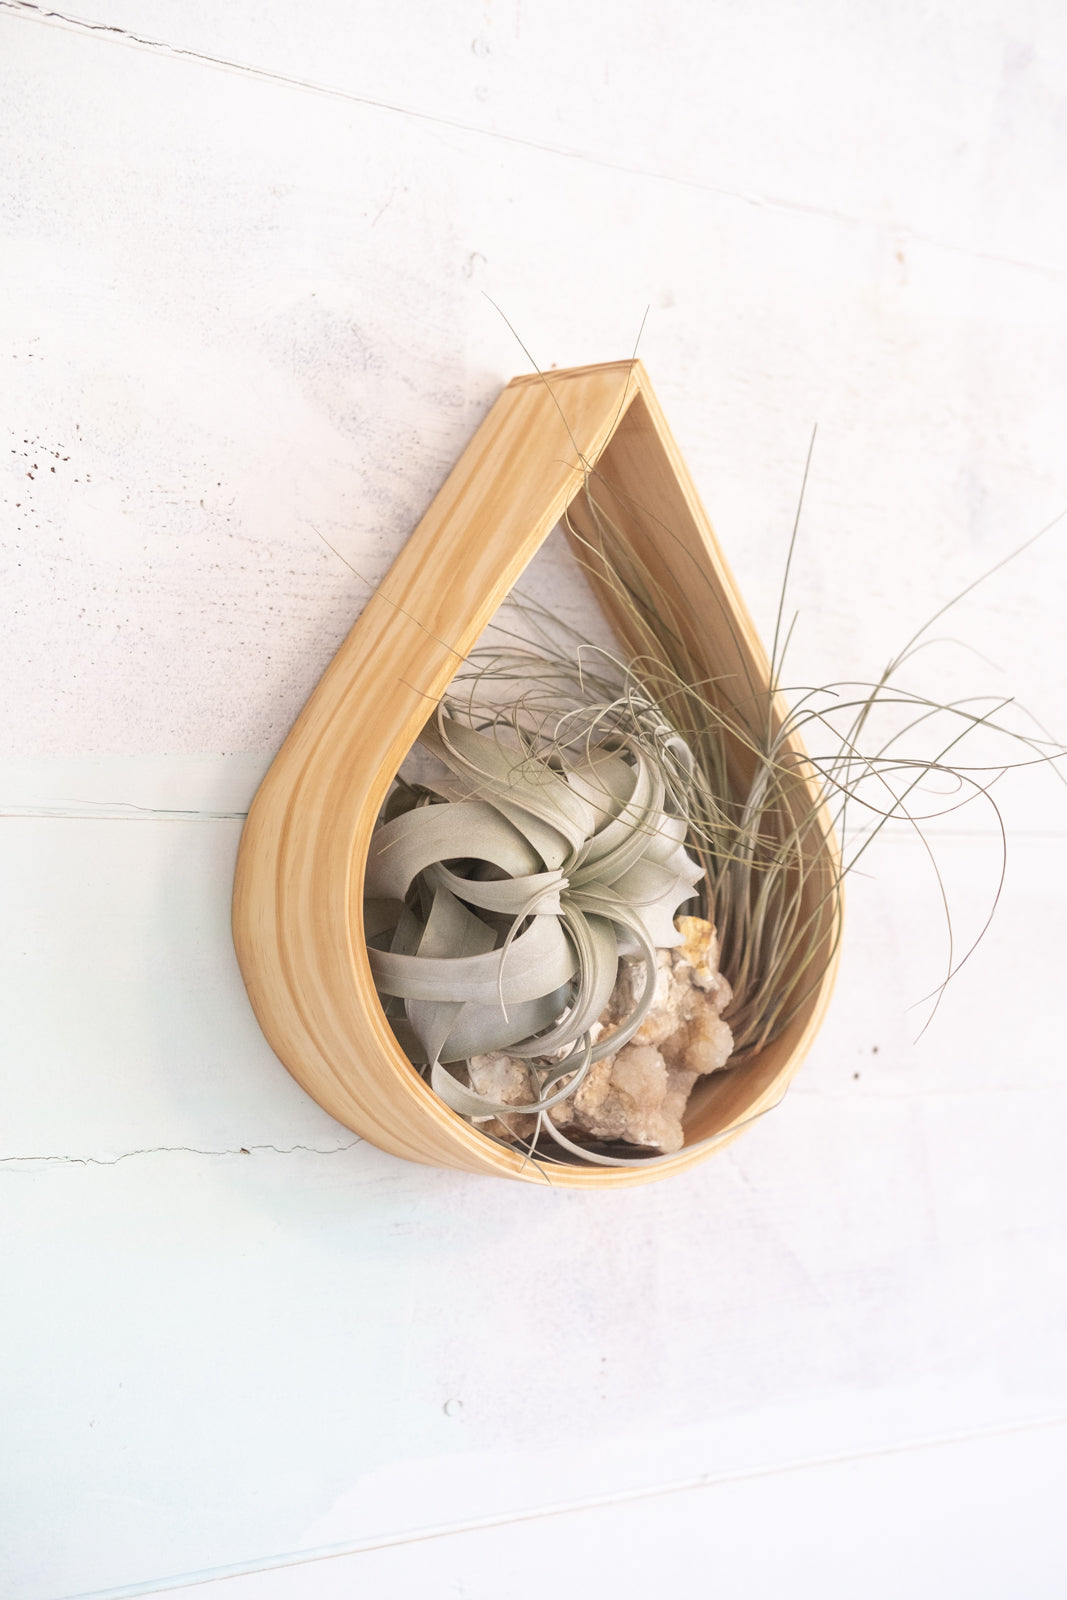 Small Teardrop Plant Shelf Cubby | Wooden Wall Shelf | Wall Hanging | Plant Hanger Indoor | Wall Display Shelf | Modern Wall Shelf